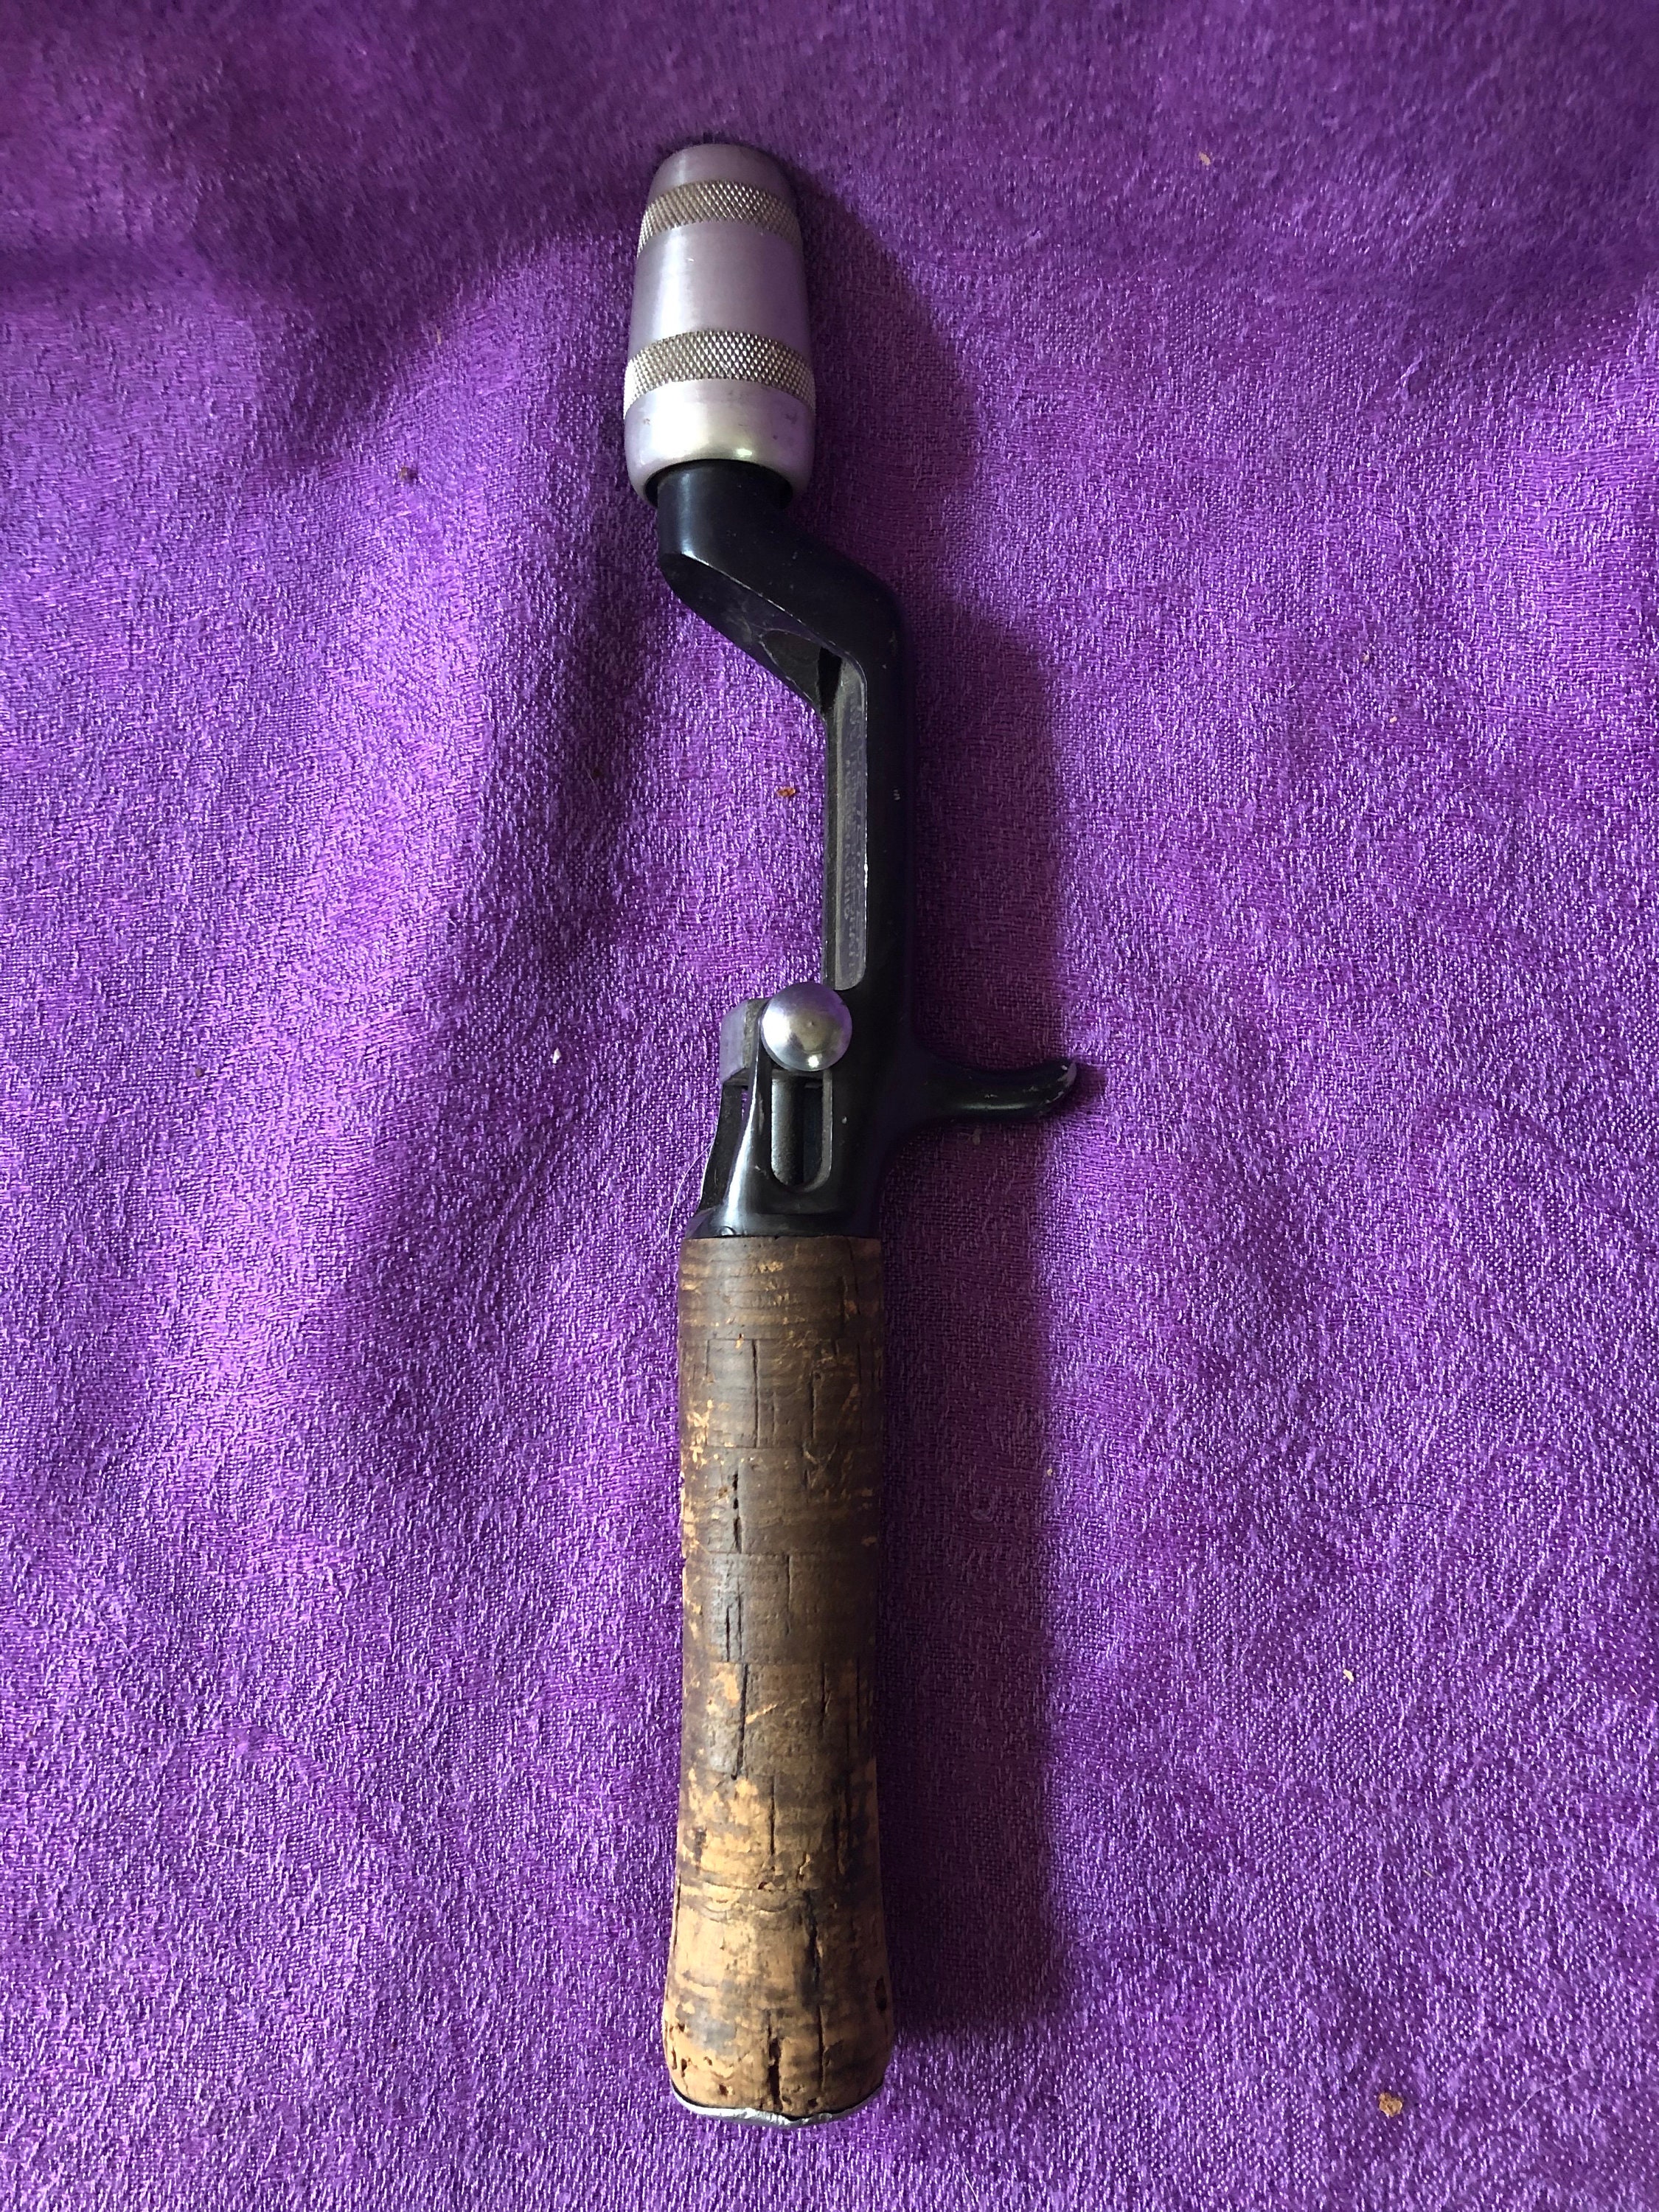 Vintage Replacement Speedlock Fishing Pole Handle, Pat No 2102237 -   Canada